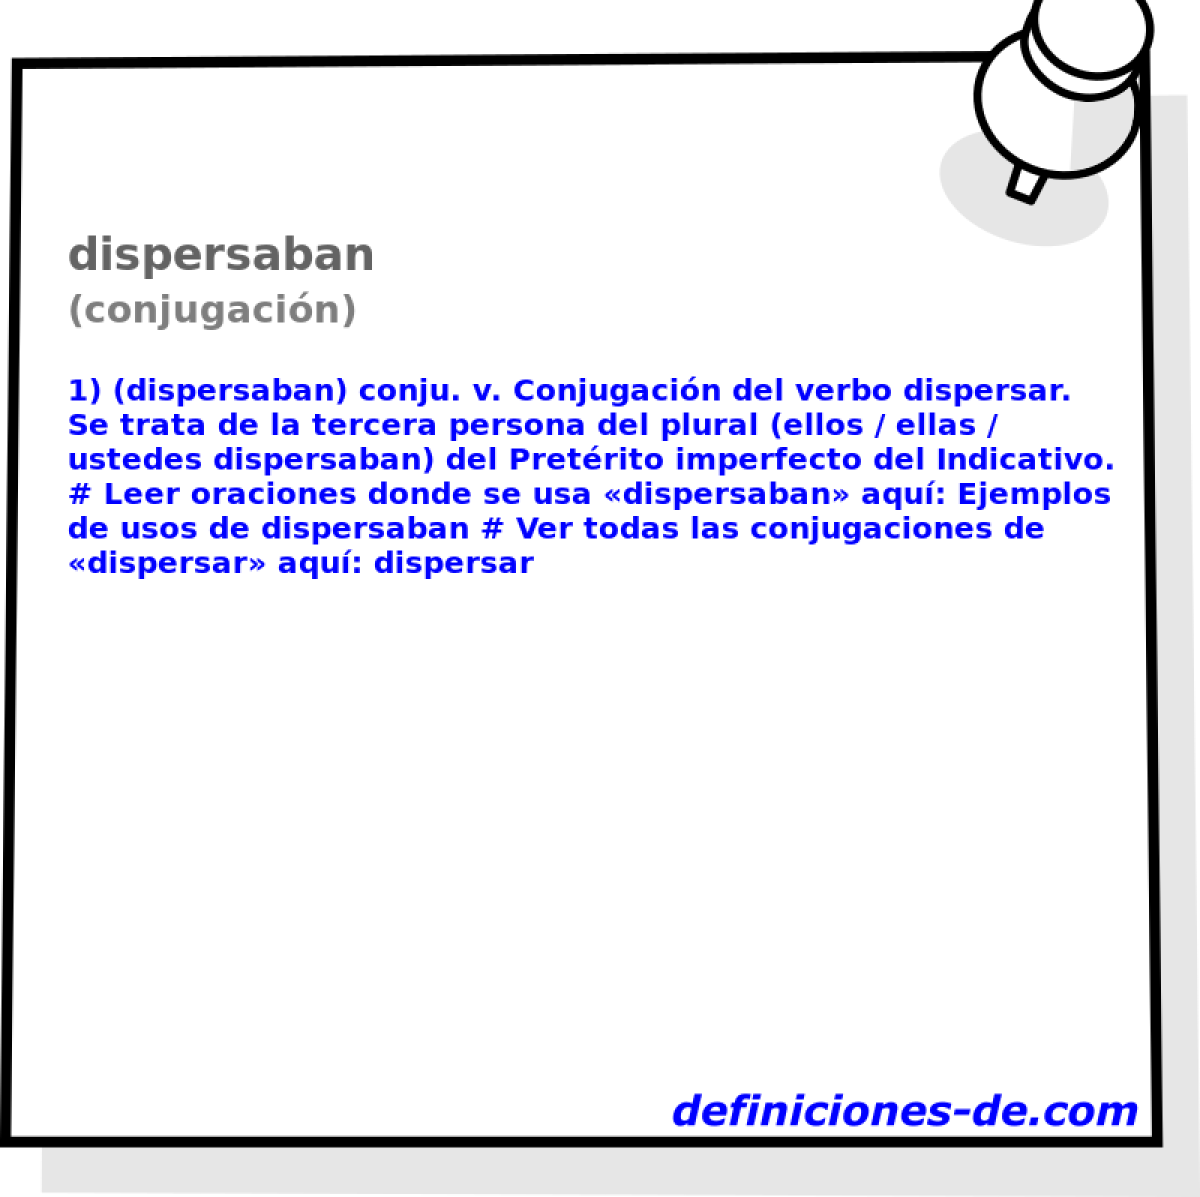 dispersaban (conjugacin)